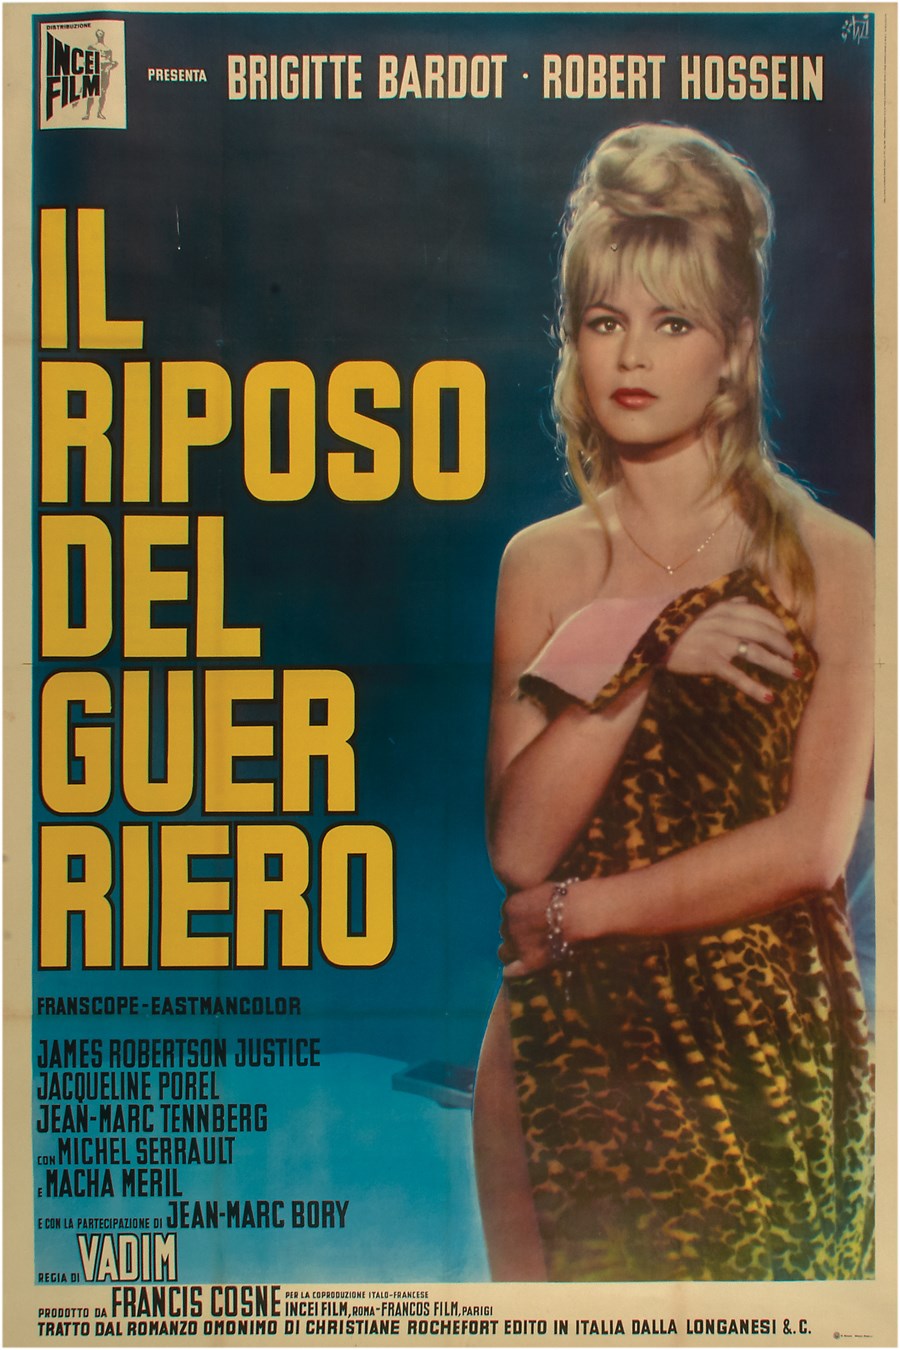 Pop Culture Autographs - HUGE 1962 Brigitte Bardot Original Italian Release Film Poster (80x58")